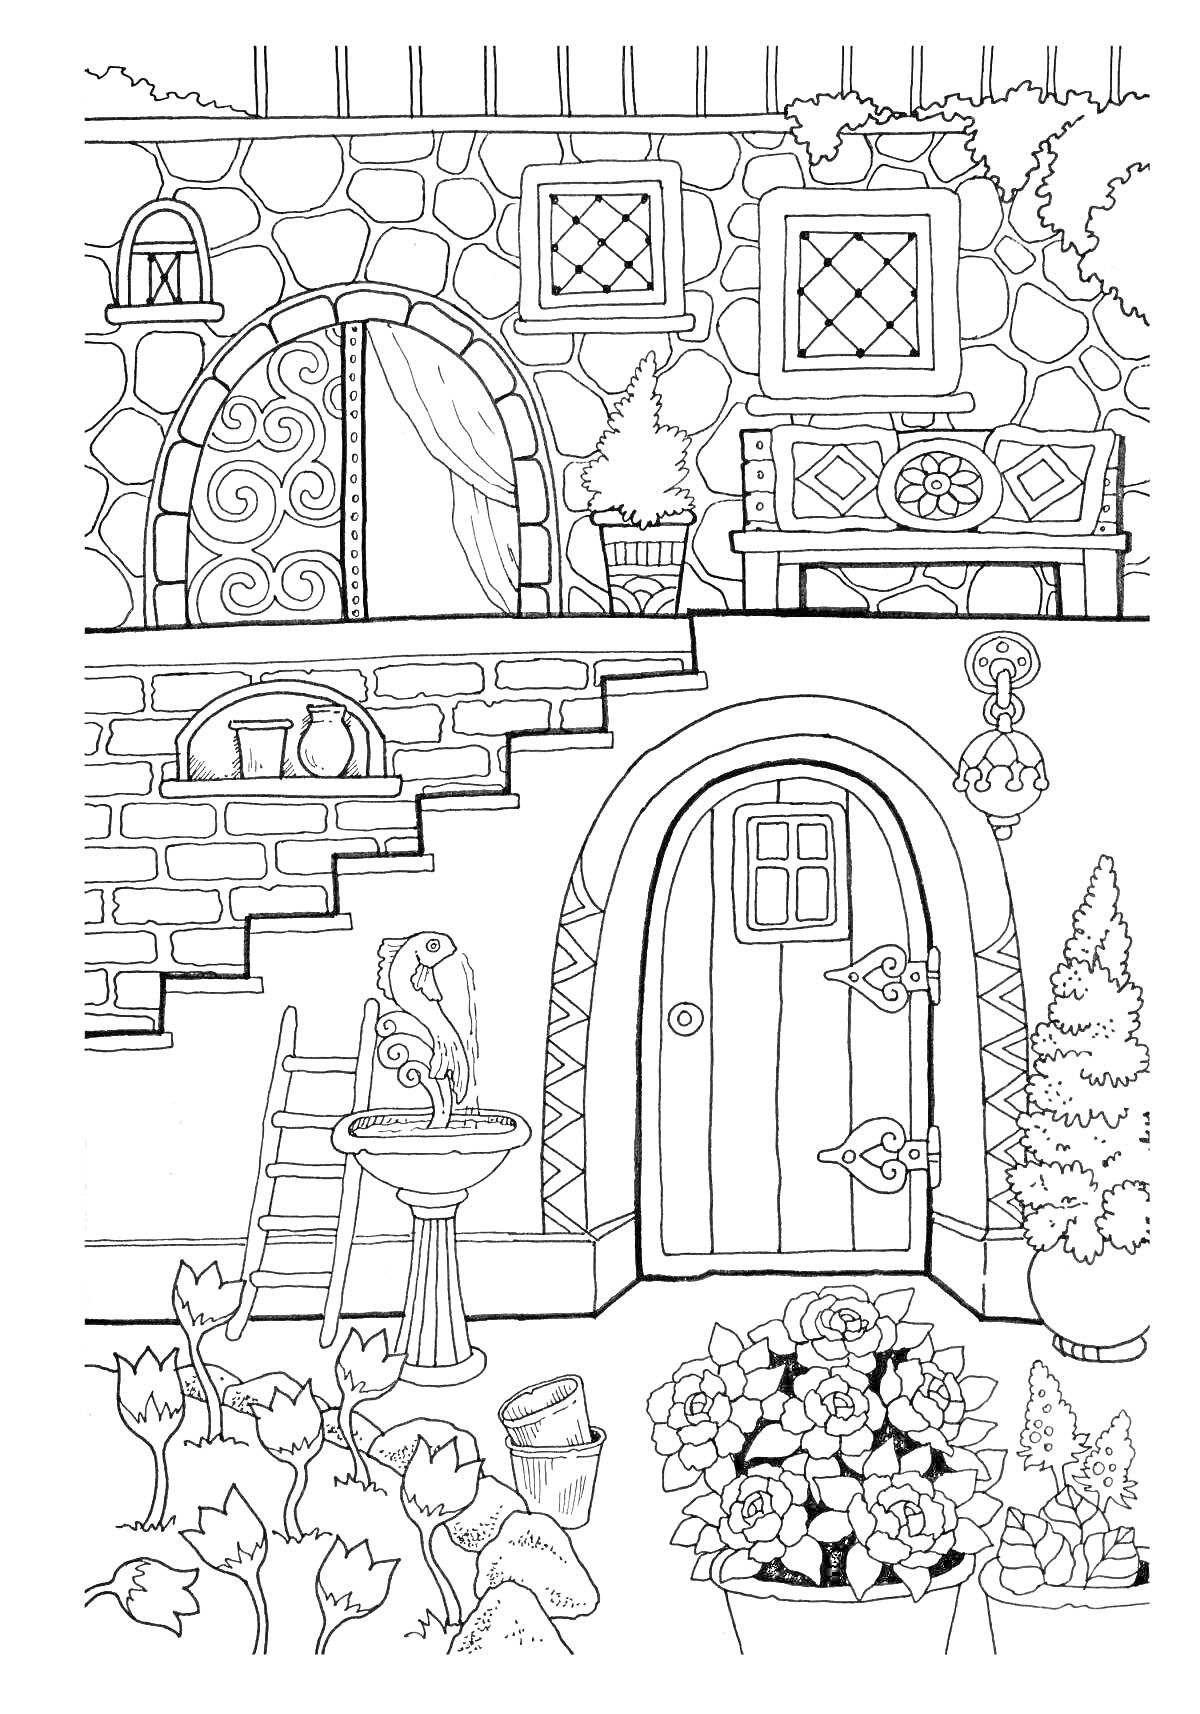 На раскраске изображено: Дом, Лестница, Дверь, Каменная стена, Занавески, Клумба, Фонтан, Кот, Цветок в горшке